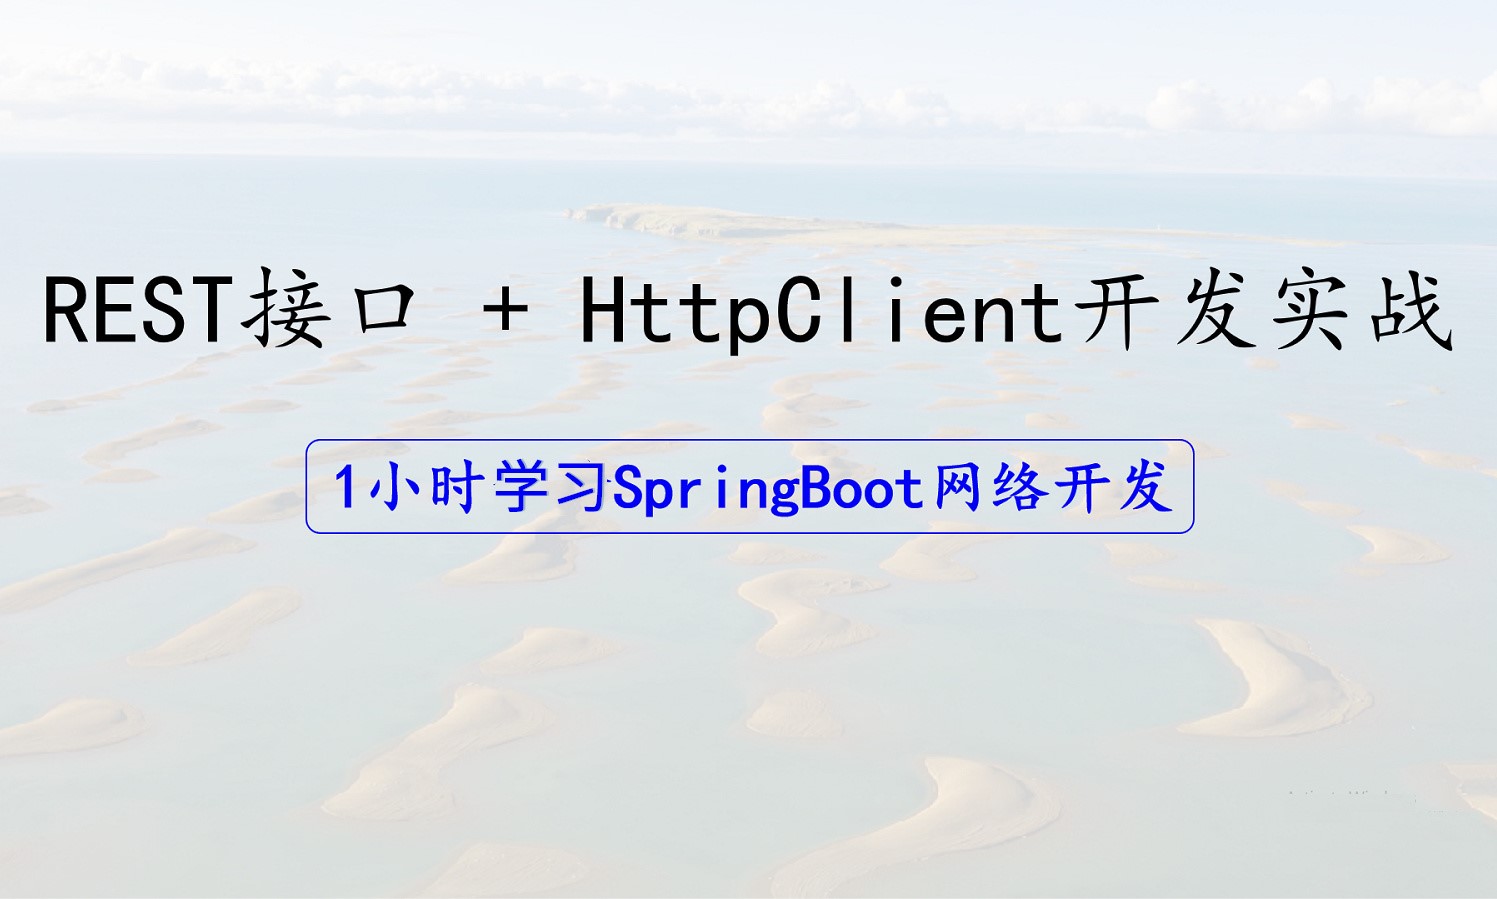 【Spring Boot Web服务开发】REST接口 + HttpClient开发进阶